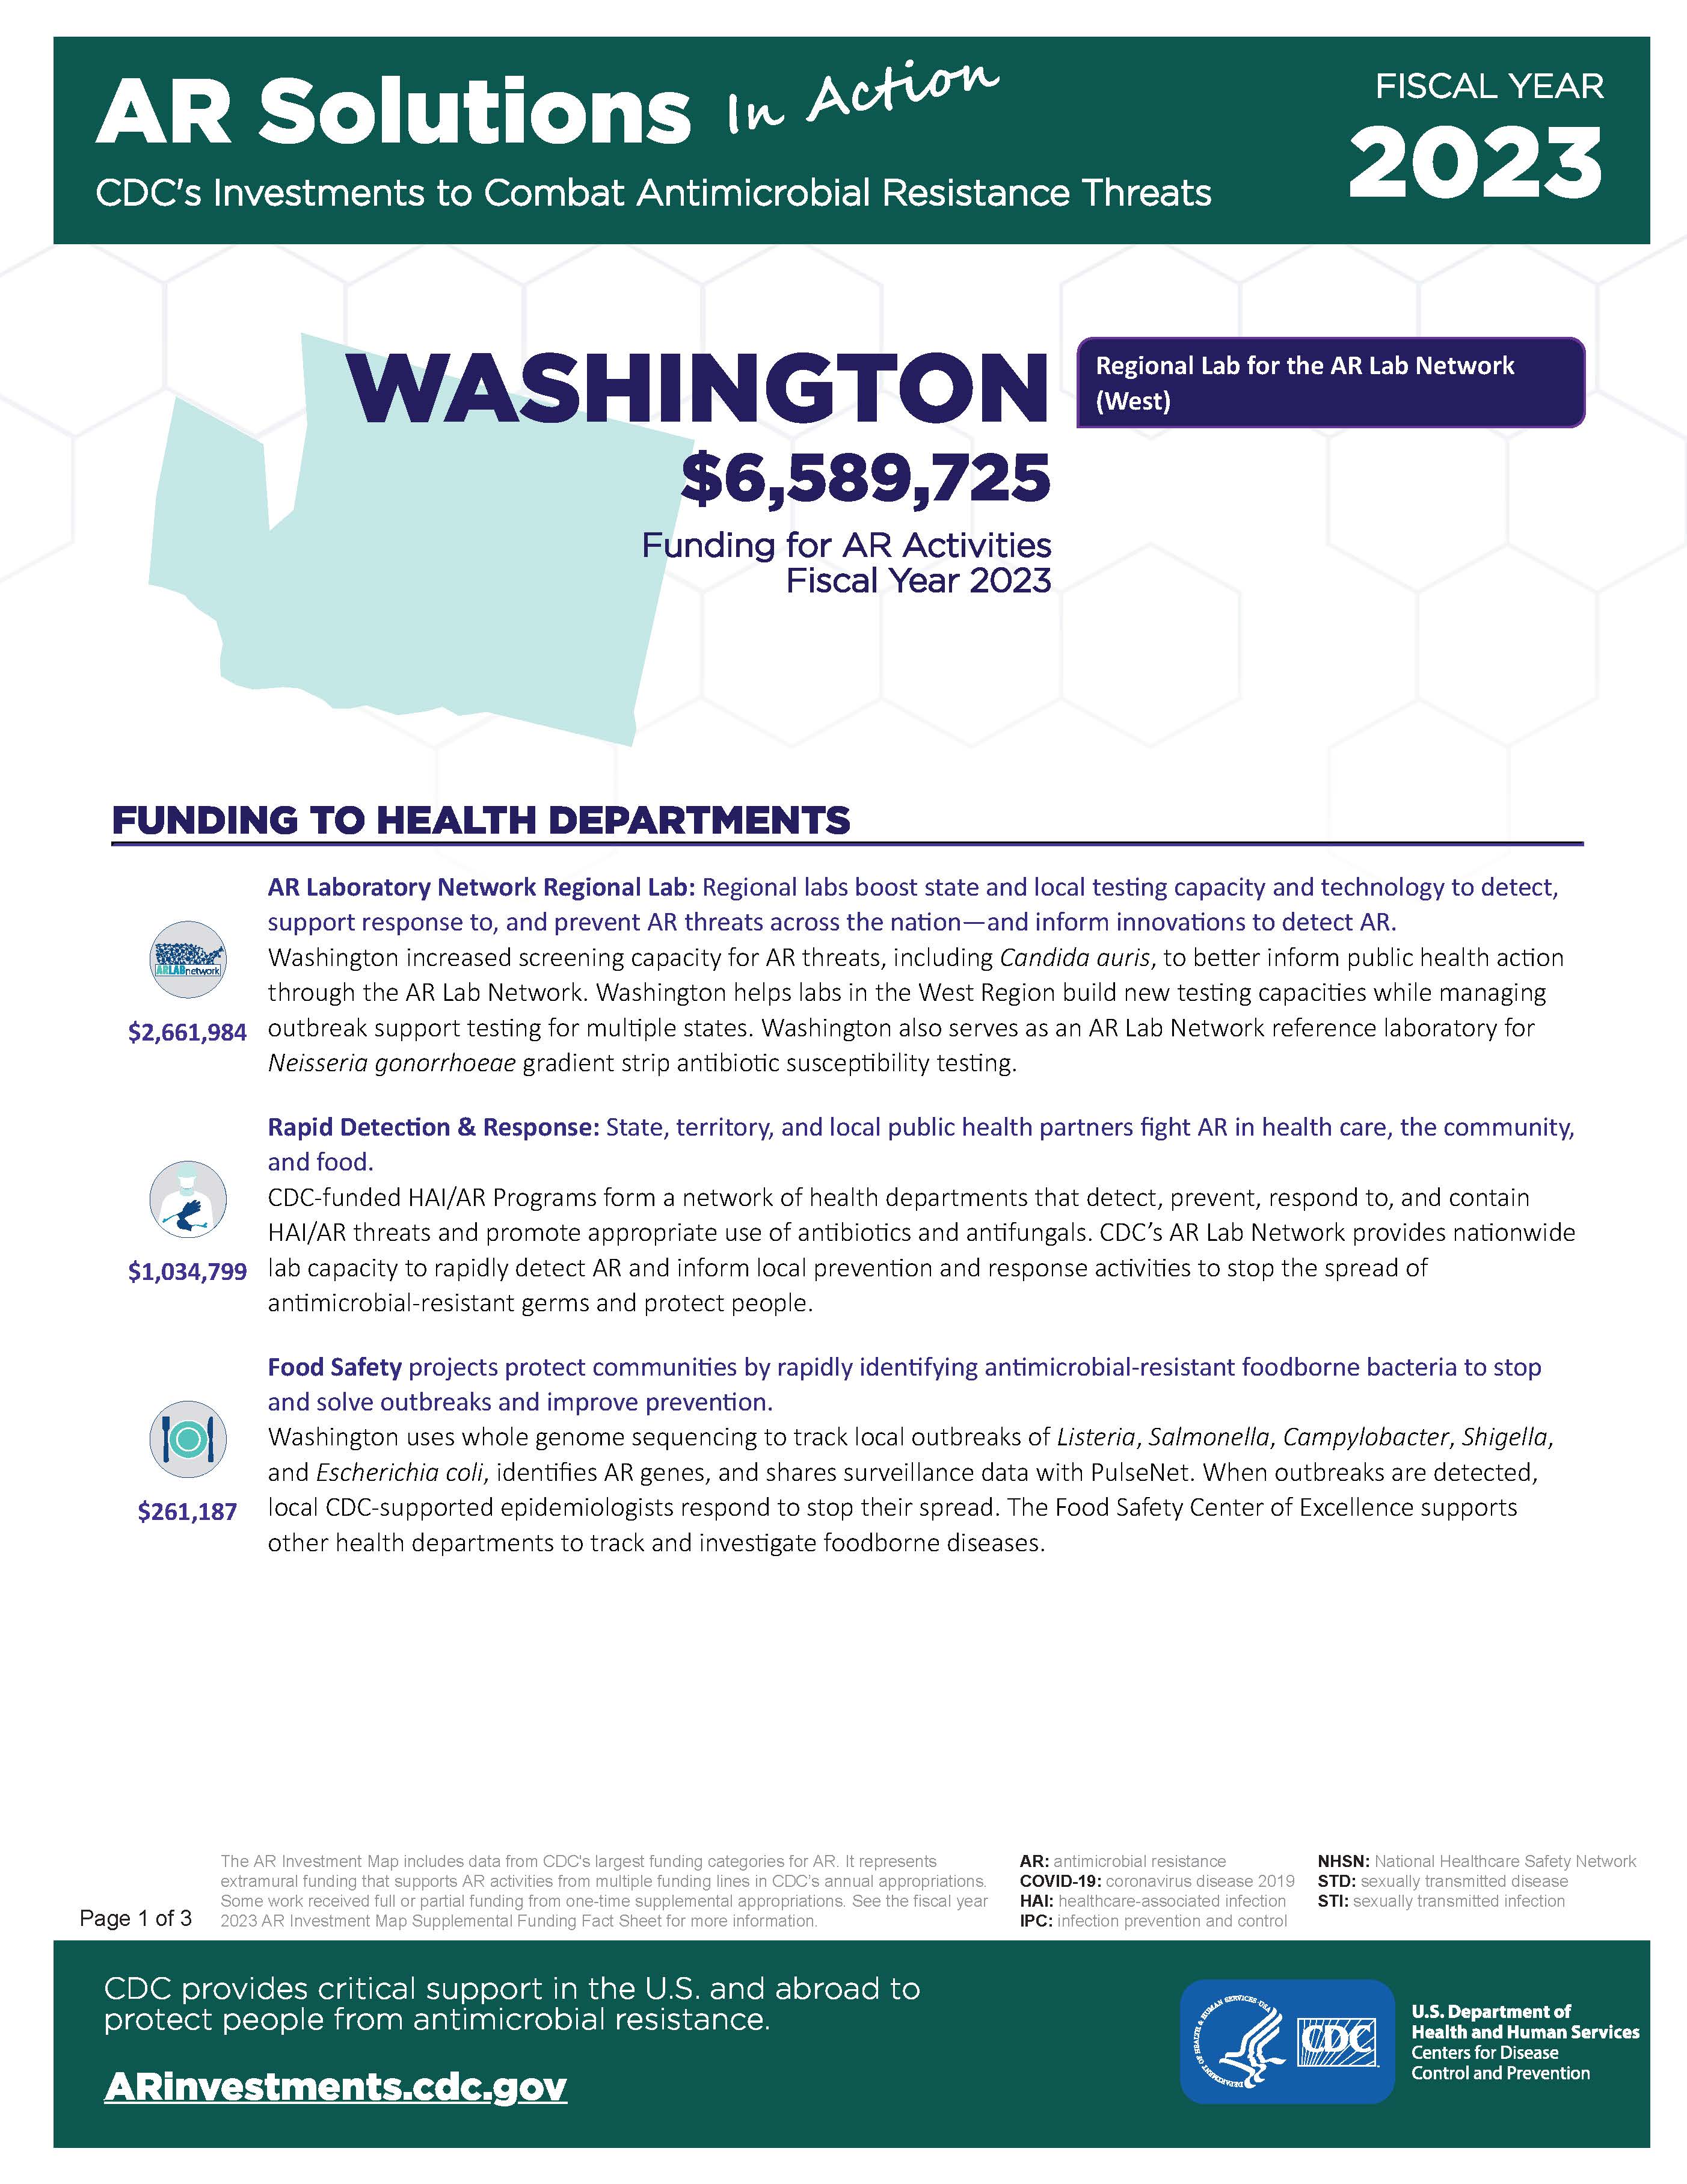 View Factsheet for Washington